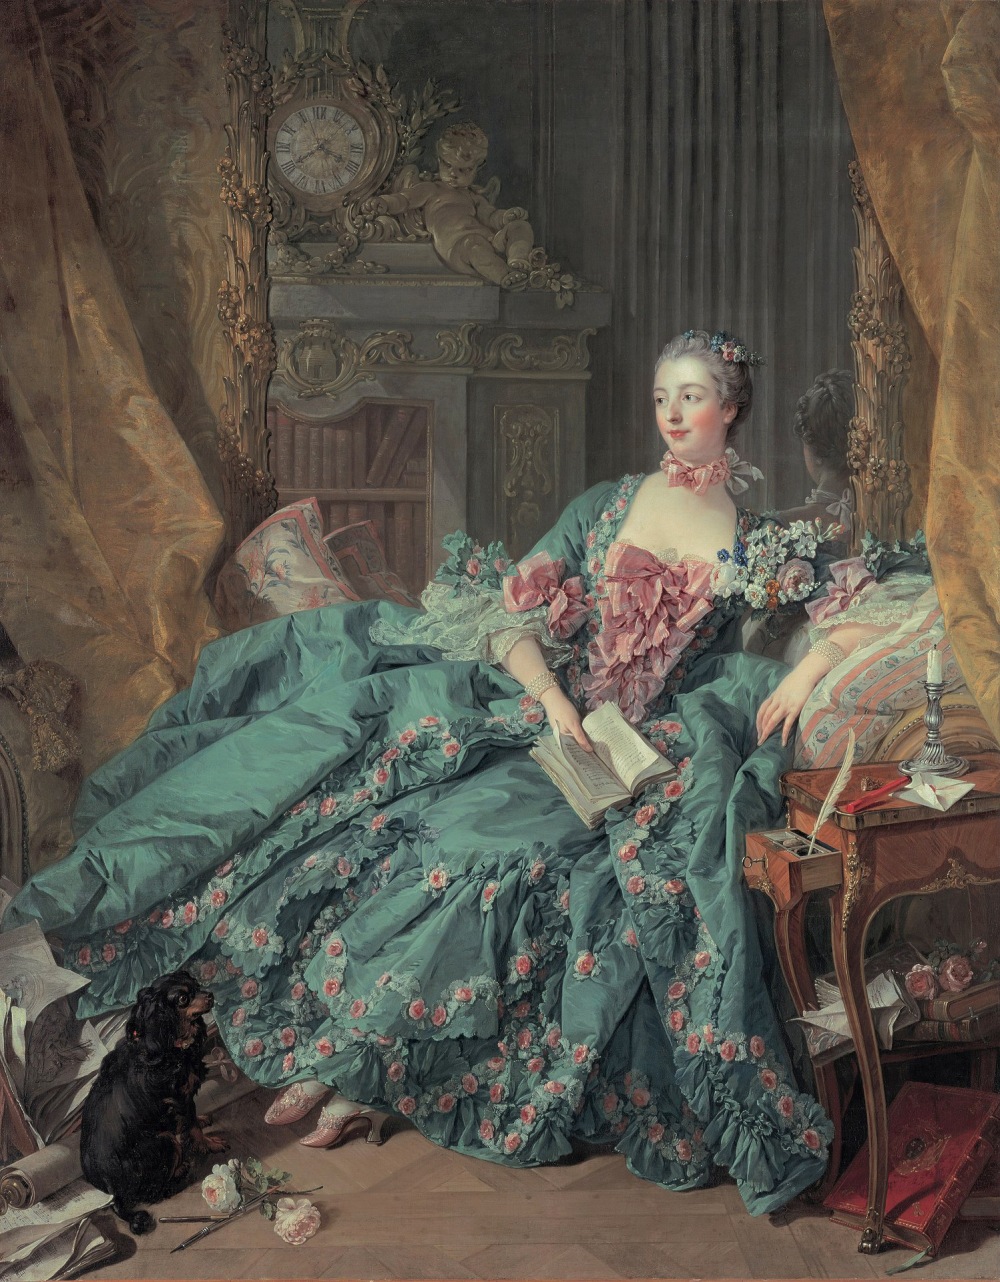 Madame de Pompadour rose in fashion